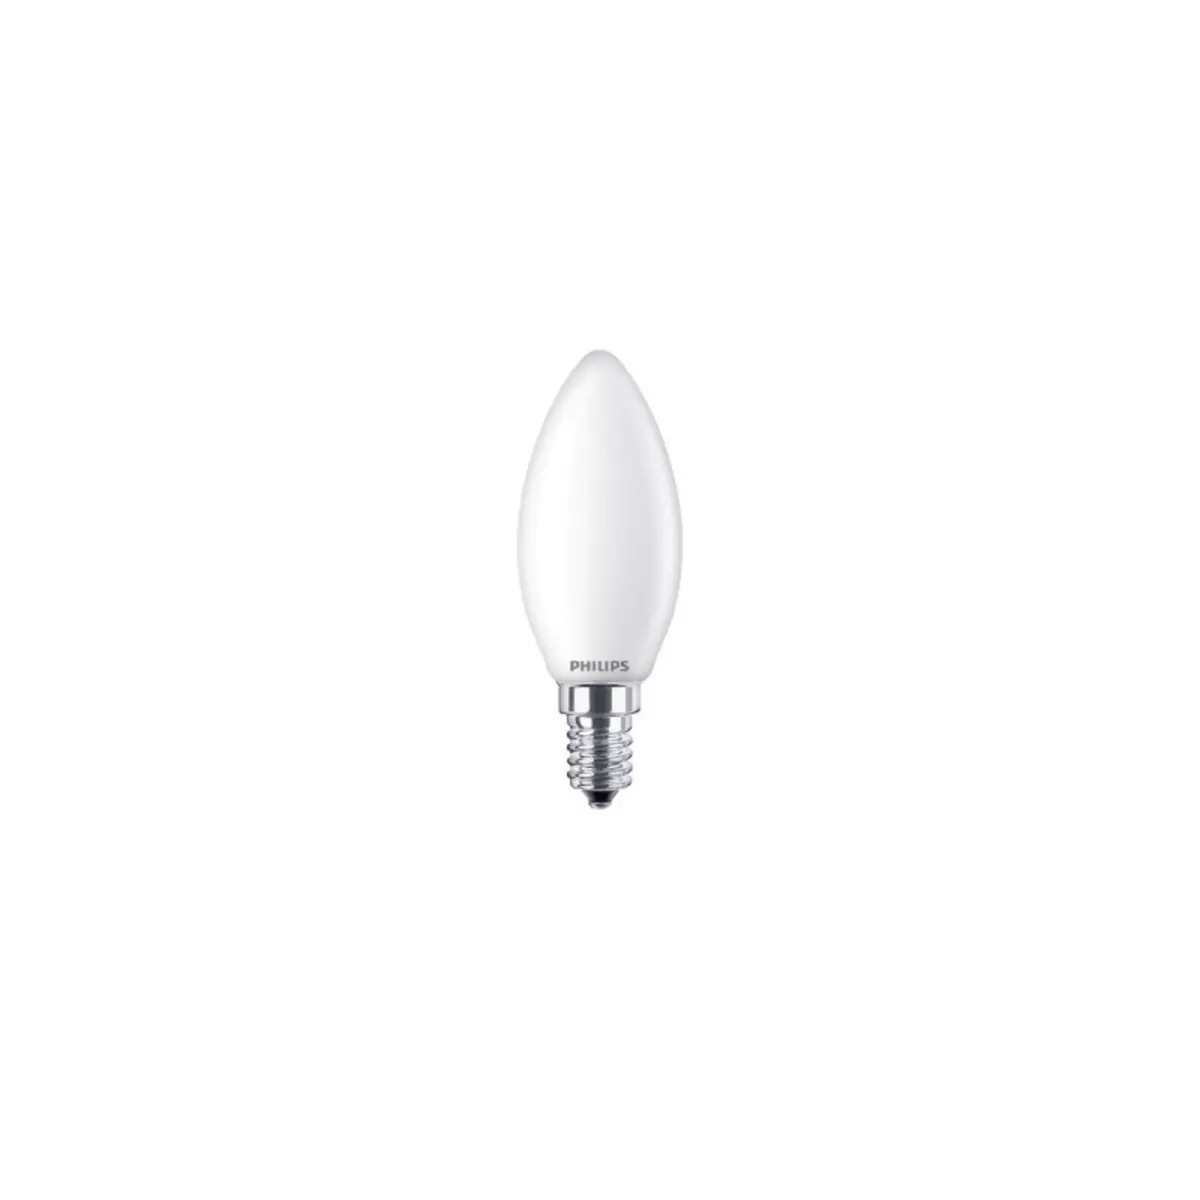 Philips Ampoule LED bougie PHILIPS - EyeComfort - 6,5W - 806 lumens - 6500K - E14 - 93011